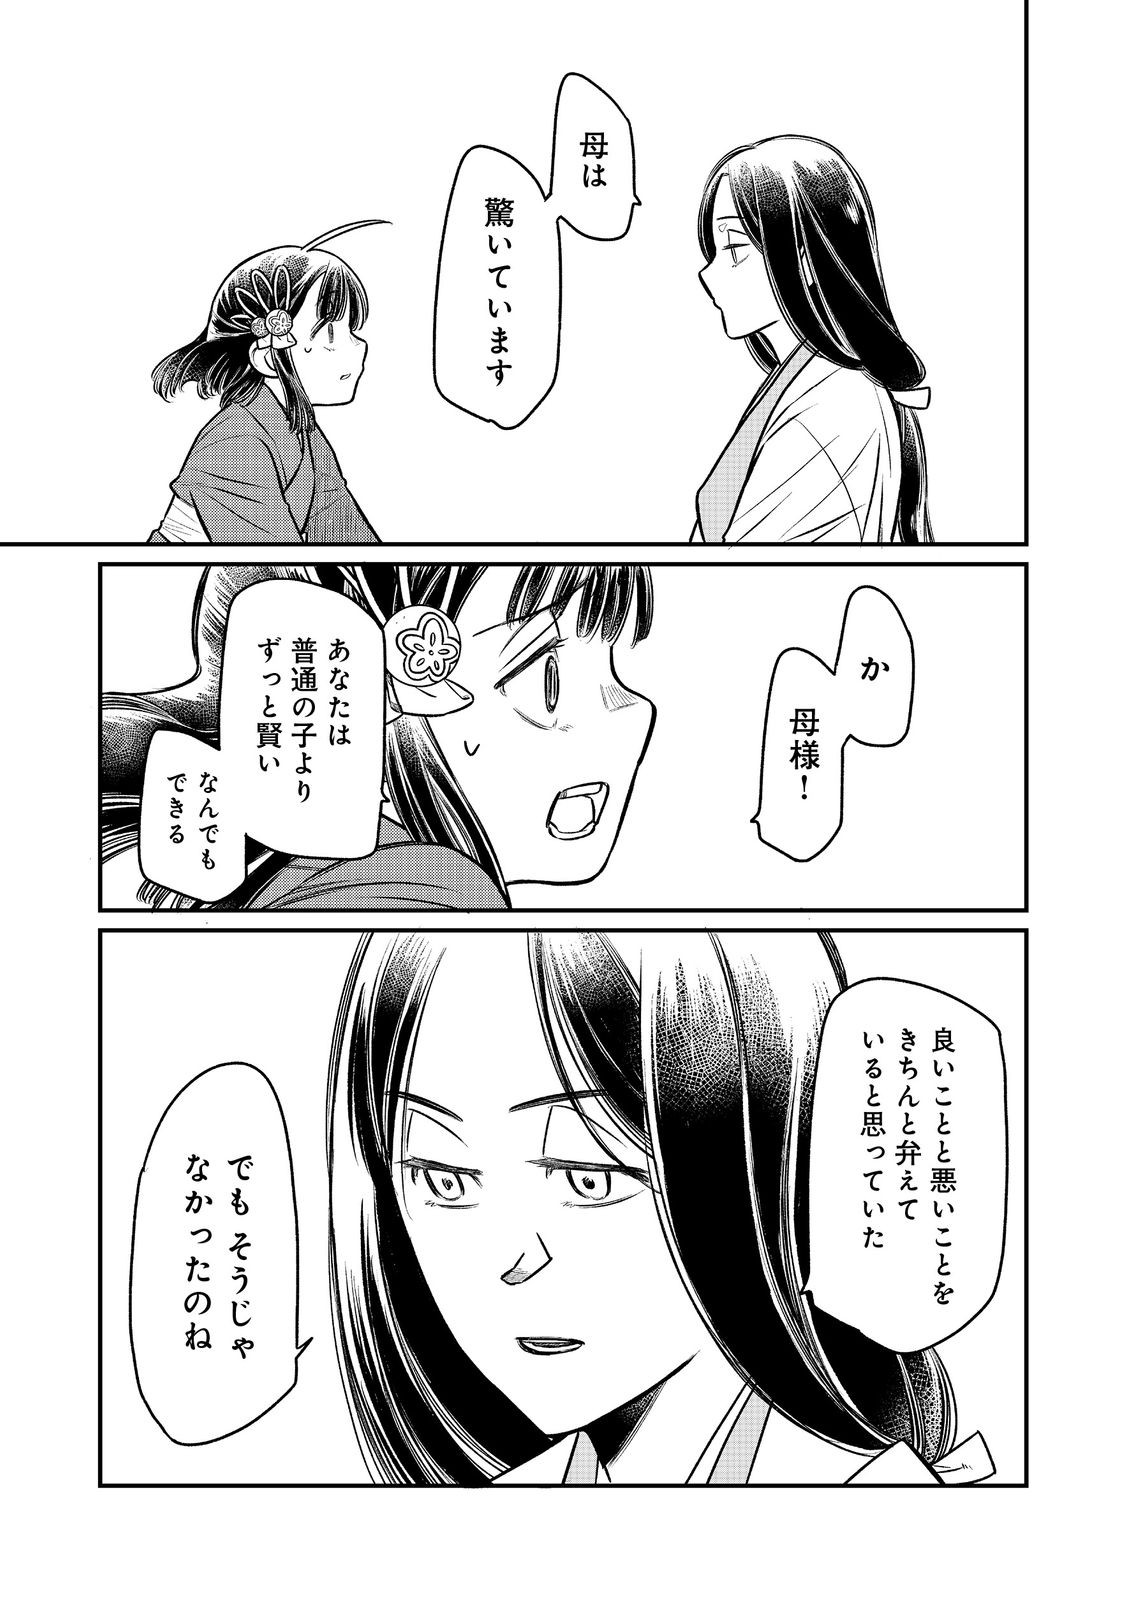 Kitanomandokoro-sama no Okeshougakari - Chapter 6.2 - Page 3